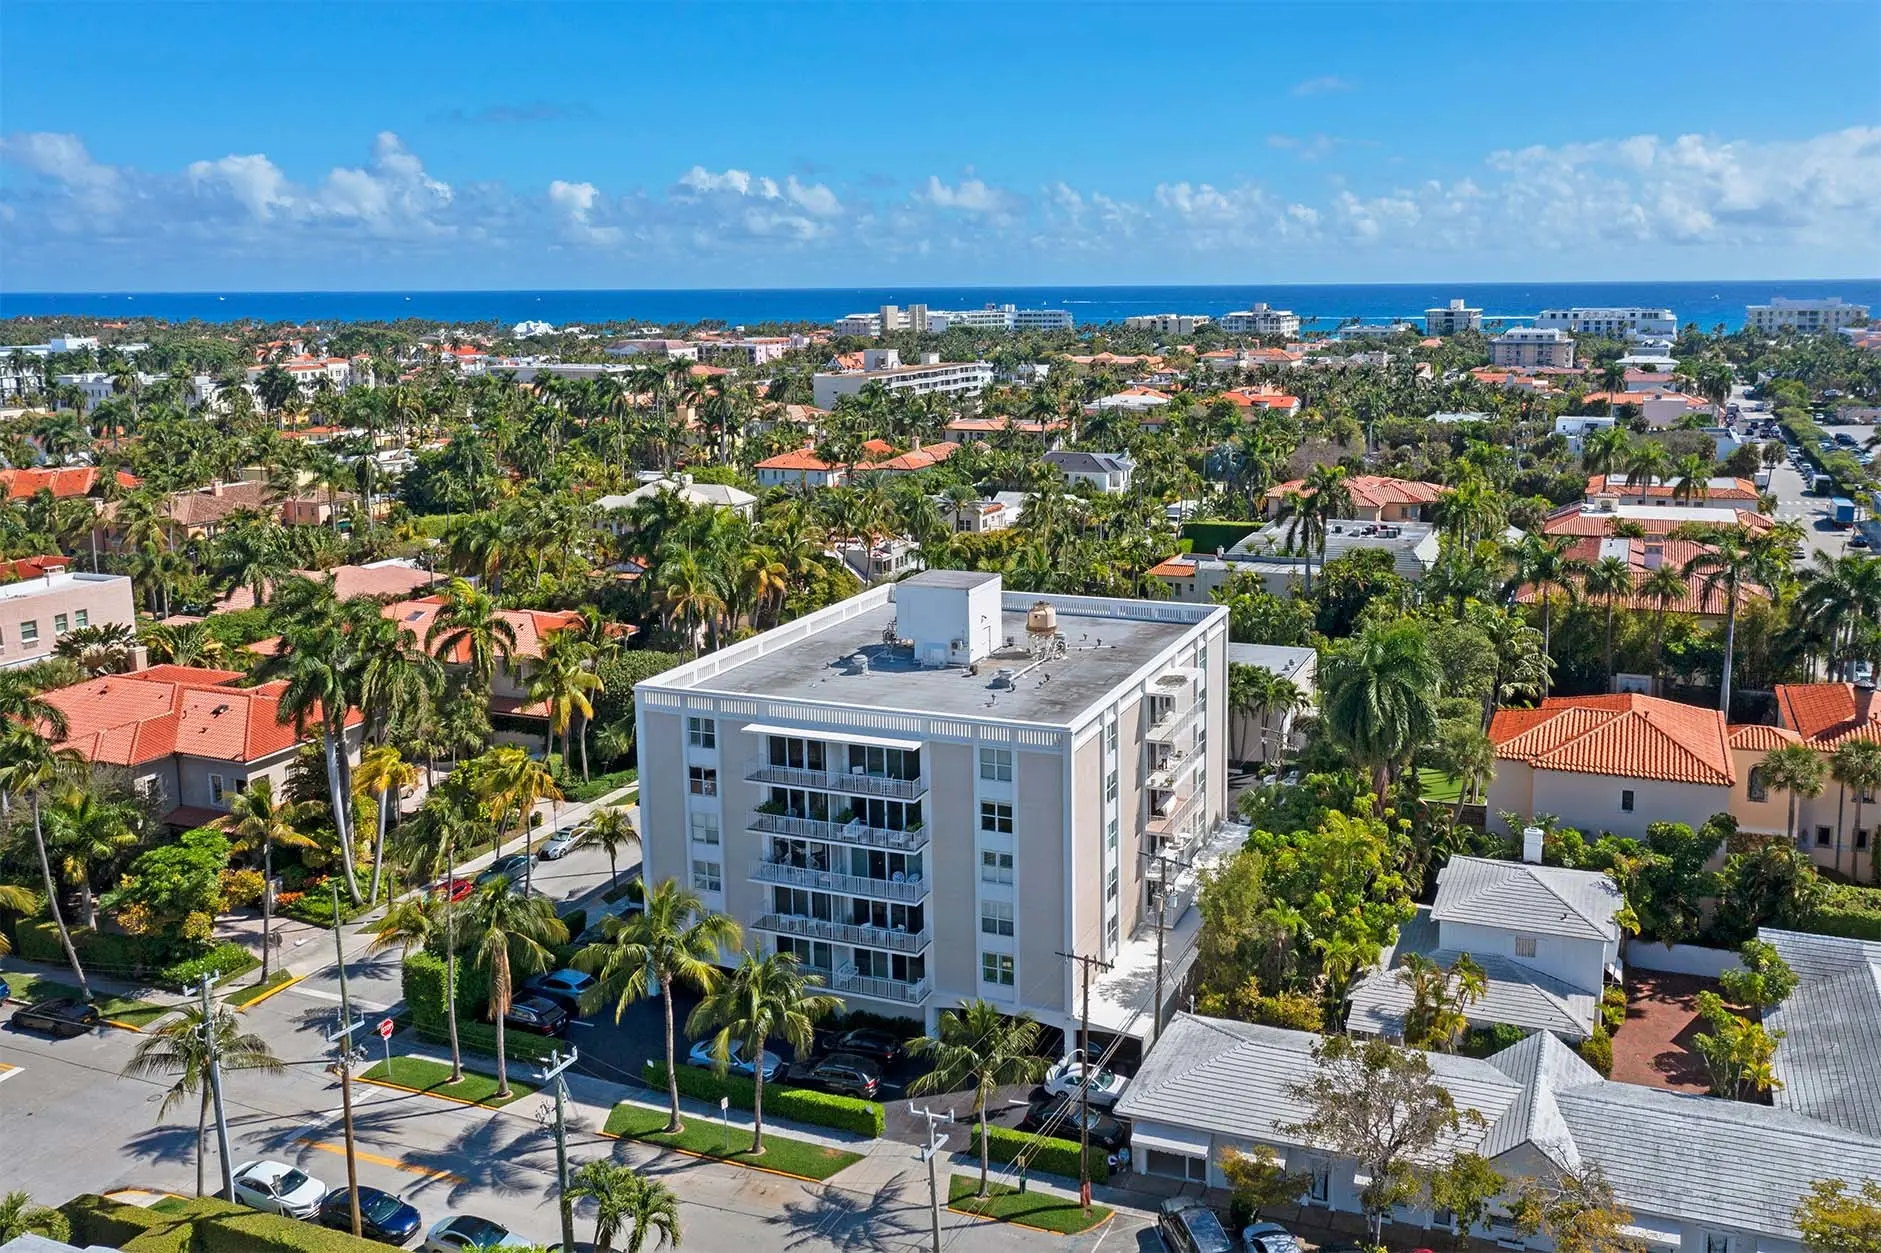 Island House Palm Beach Condos for Sale | Island House Condos